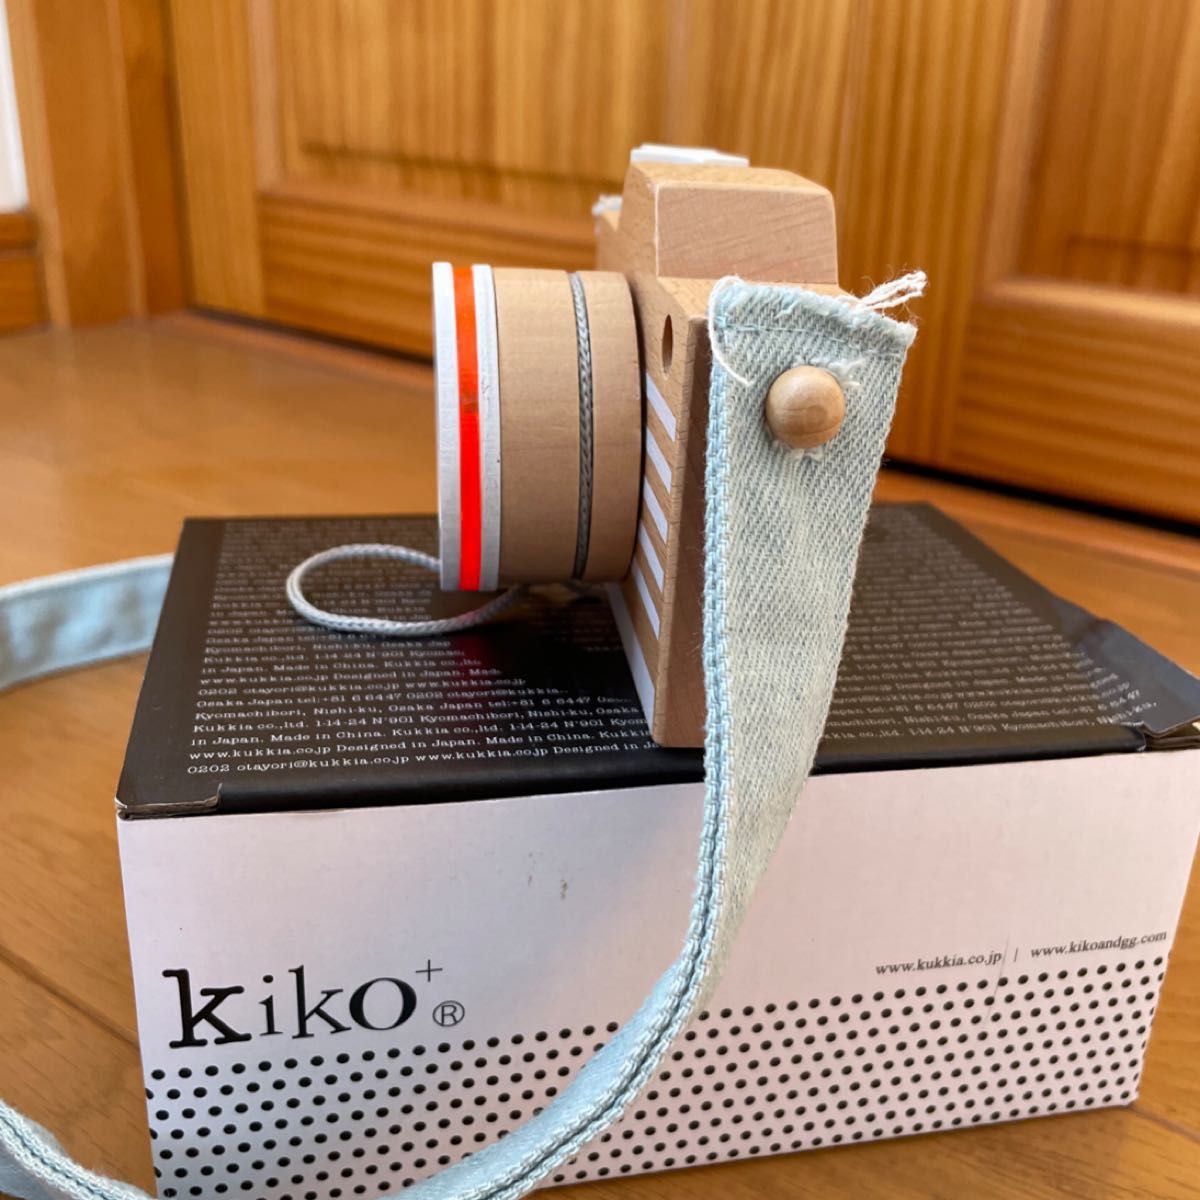 kiko+ キコ カメラ camera 木のおもちゃ 誕生日プレゼント クリスマスプレゼント (ピンク)